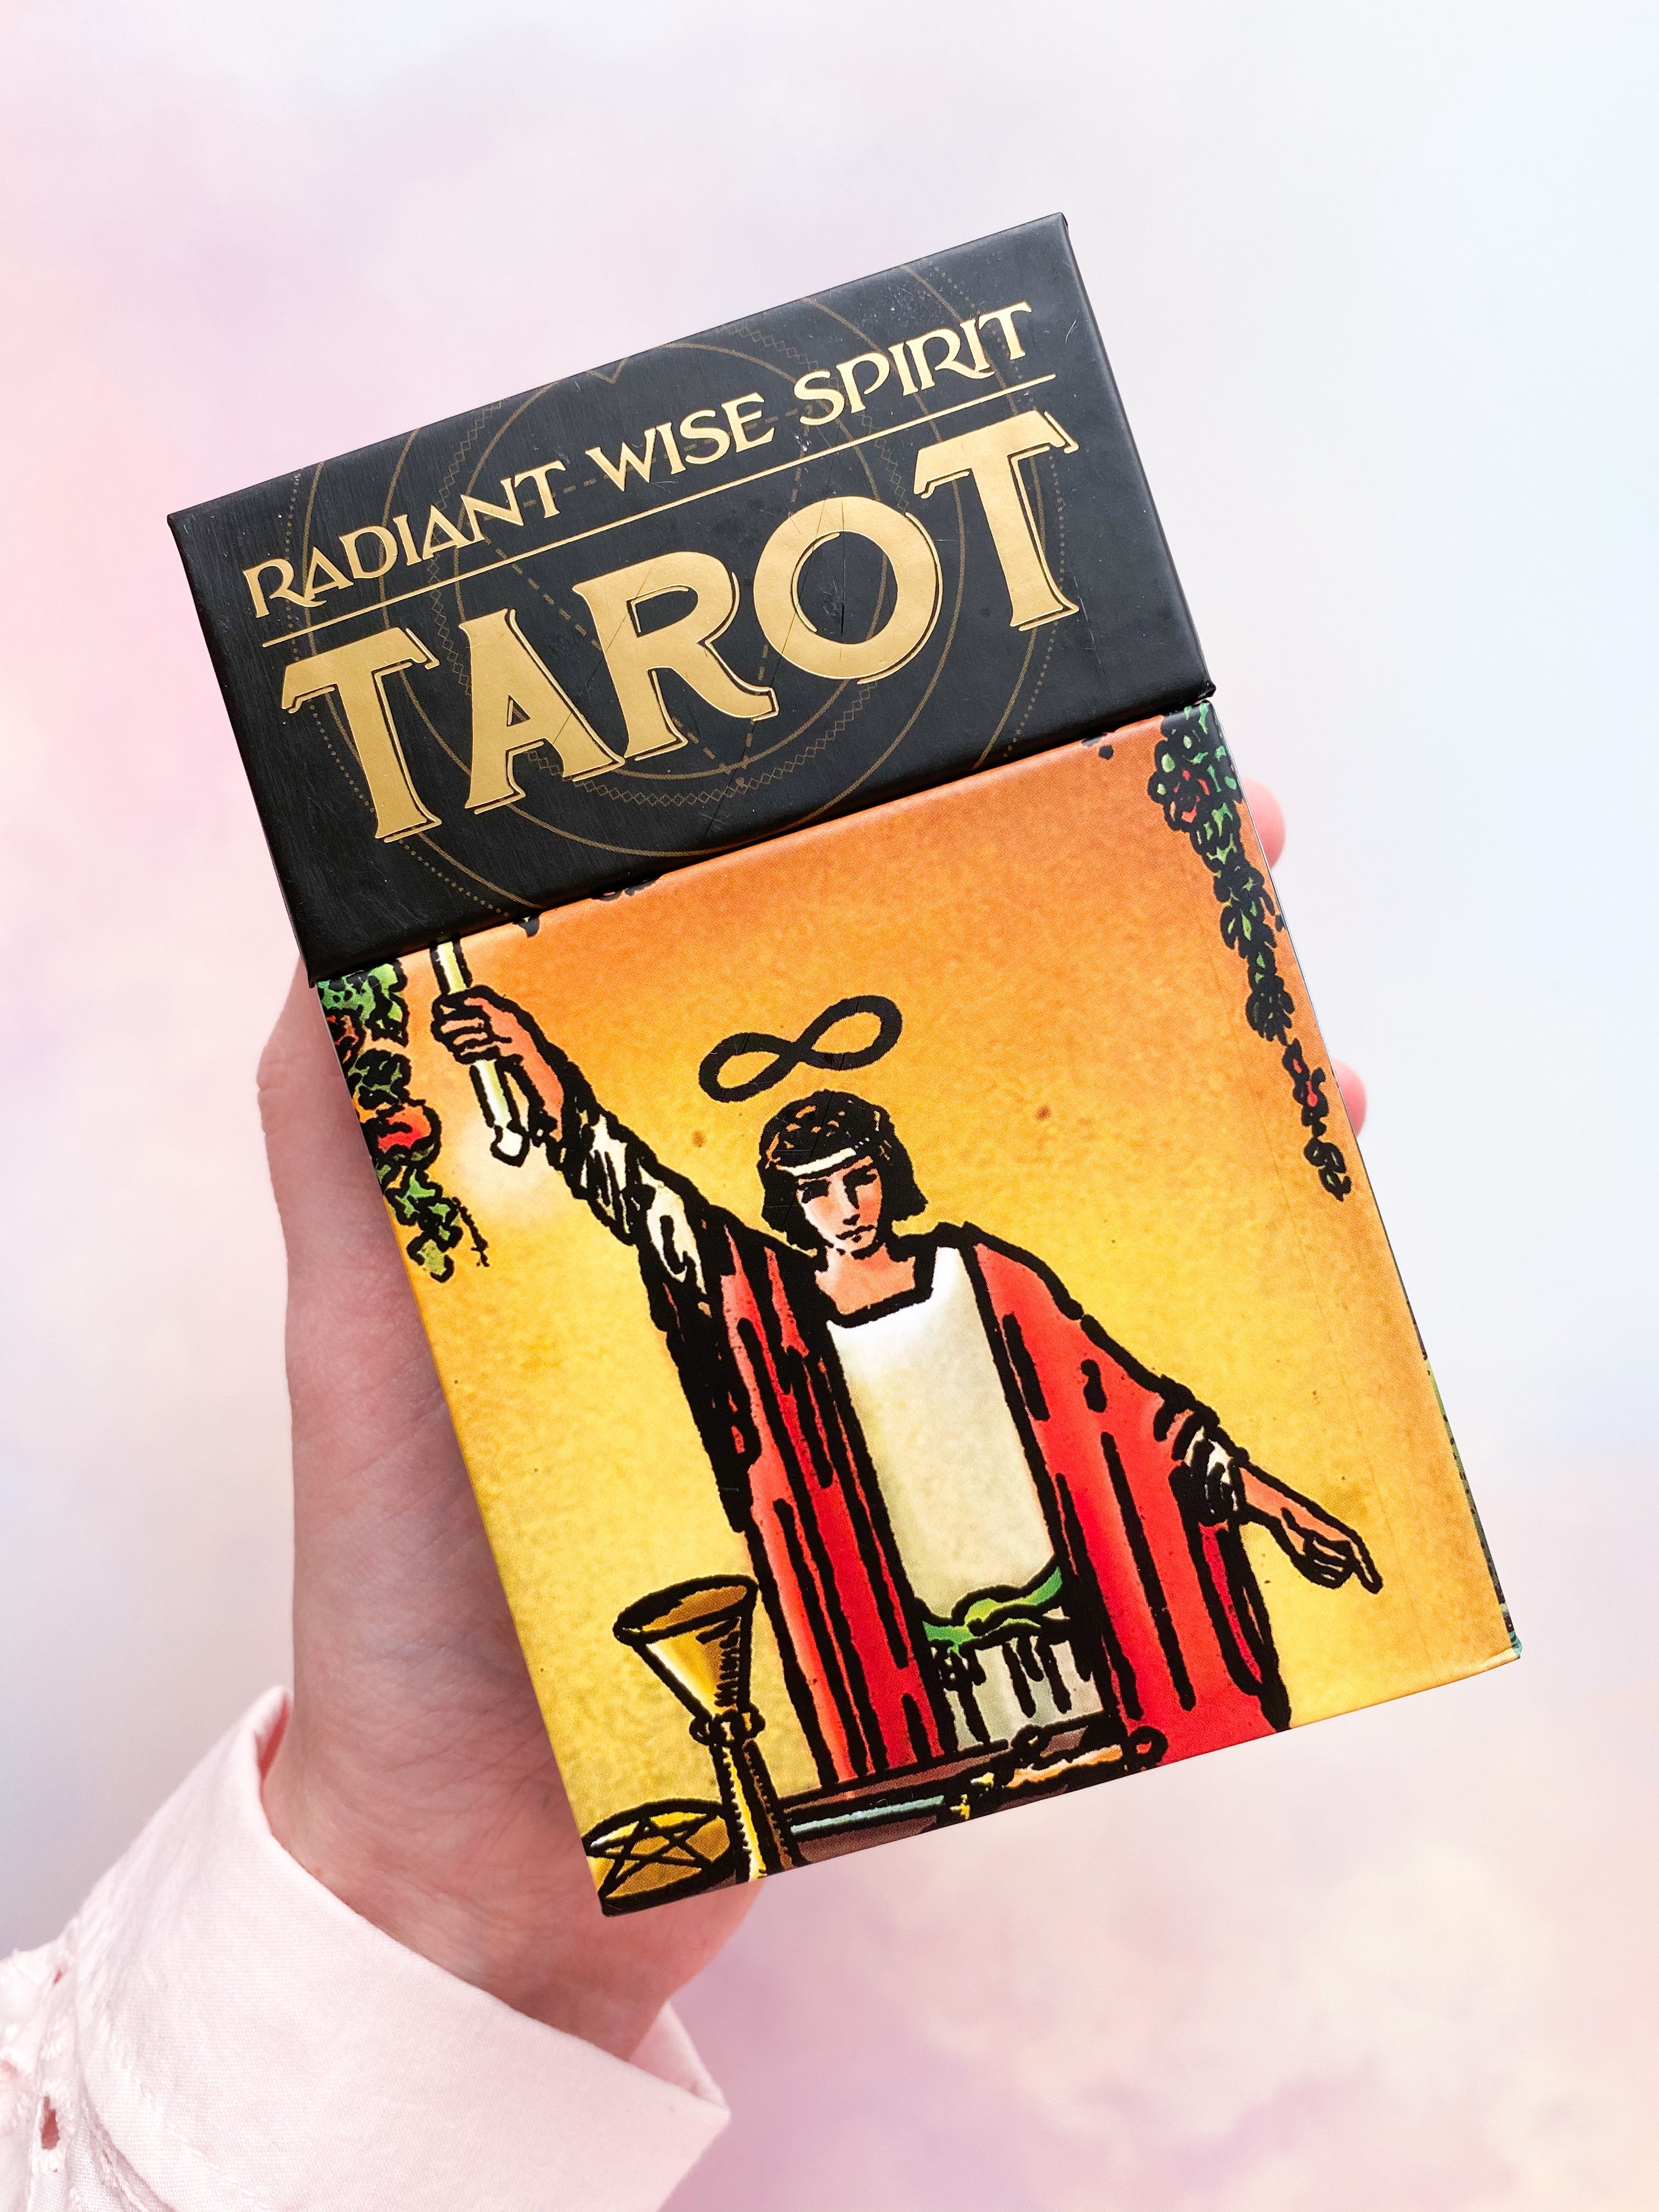 Radiant Wise Spirit Tarot - Lo Scarabeo